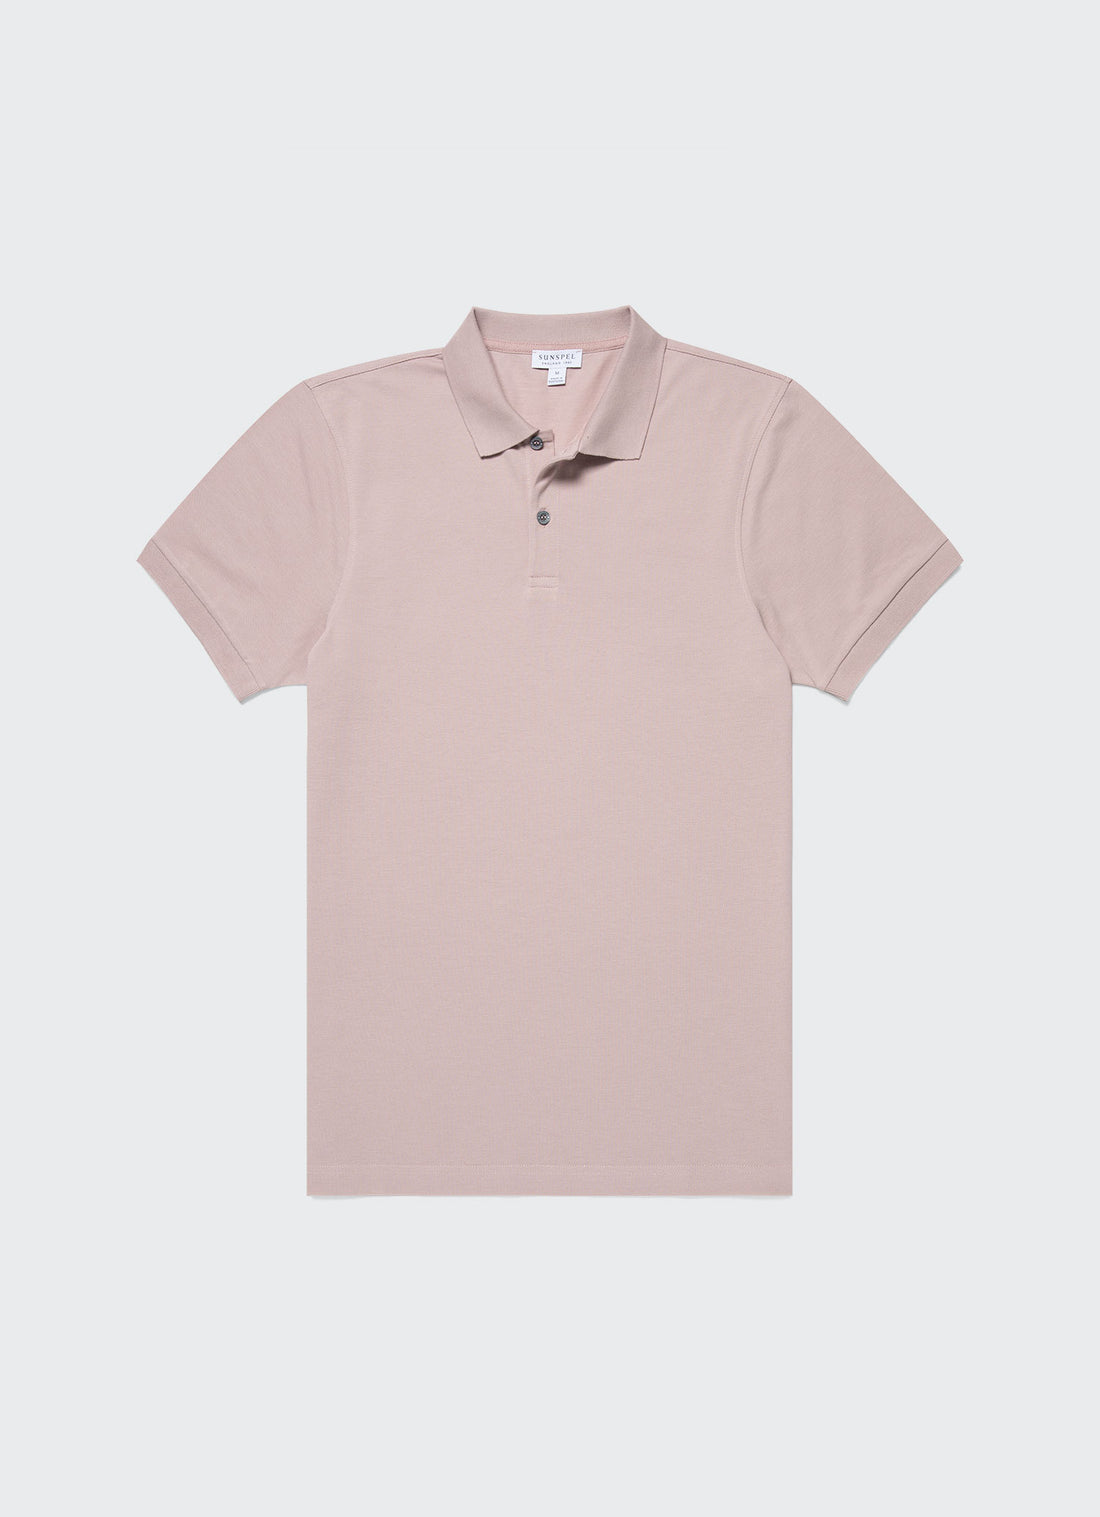 Men's Piqué Polo Shirt in Pale Pink